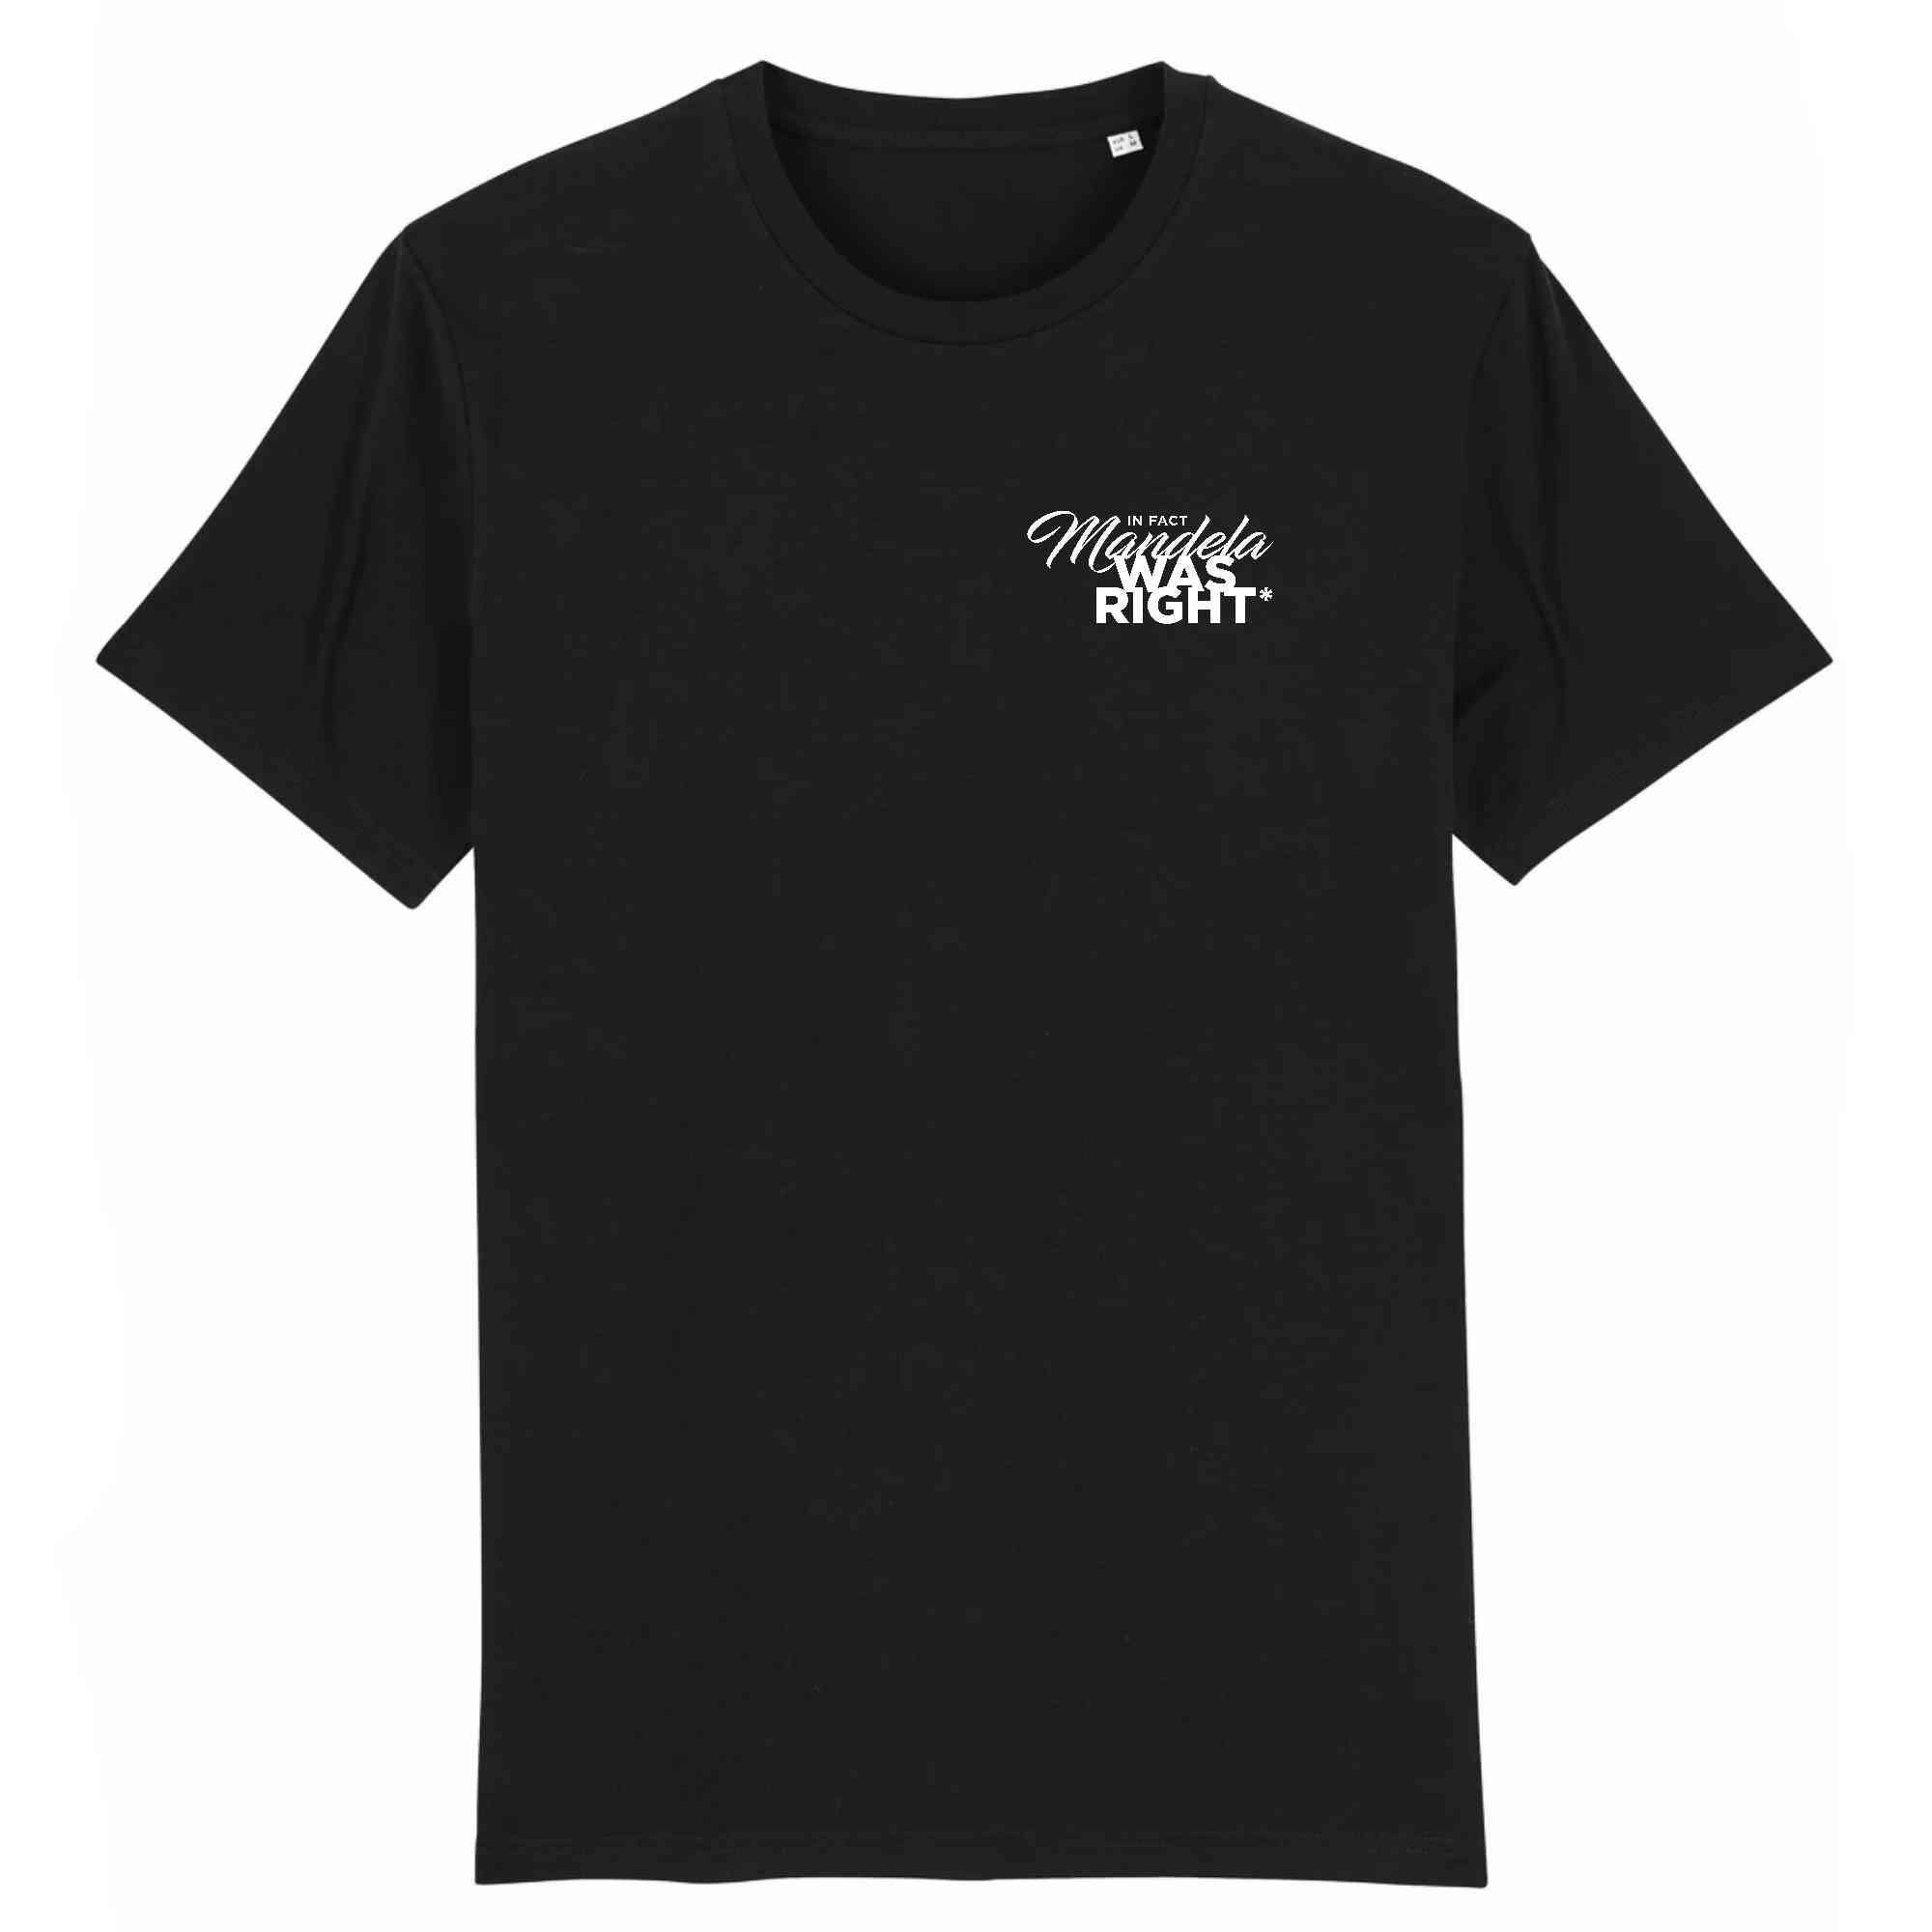 T-shirt noir et blanc en coton bio Mandella WAS RIGHT - Collection Tshirt inspirant